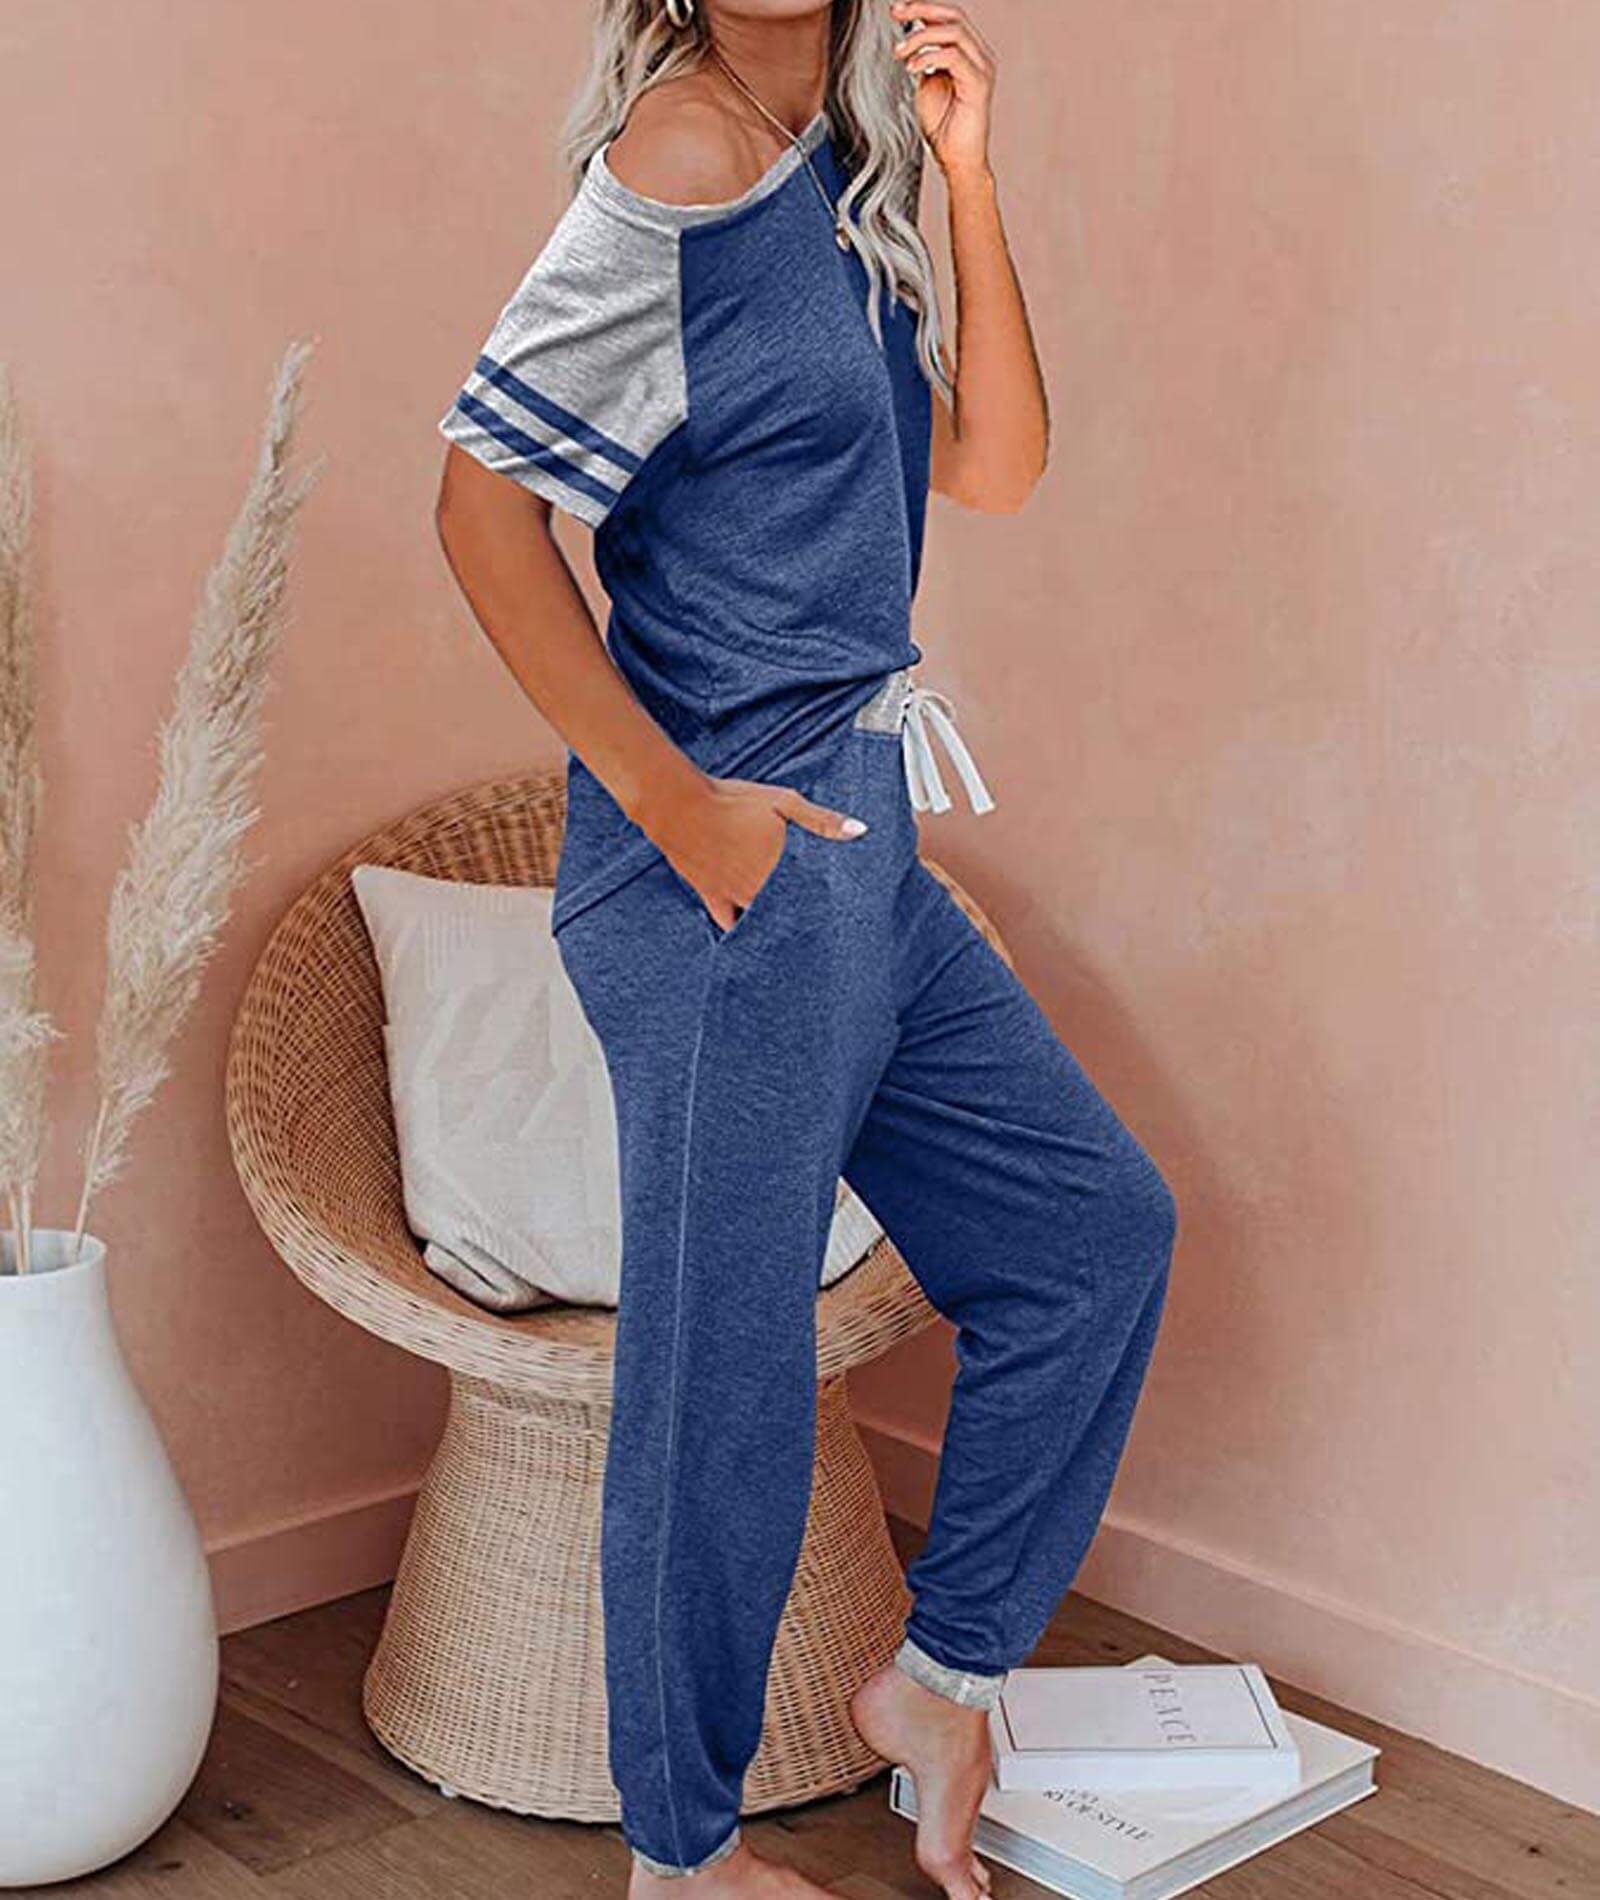  Women's Comfy Striped Letter Graphic Top Pants Sweatsuit Set Short Sleeves Sports Casual Shirts Sweatpants Suits